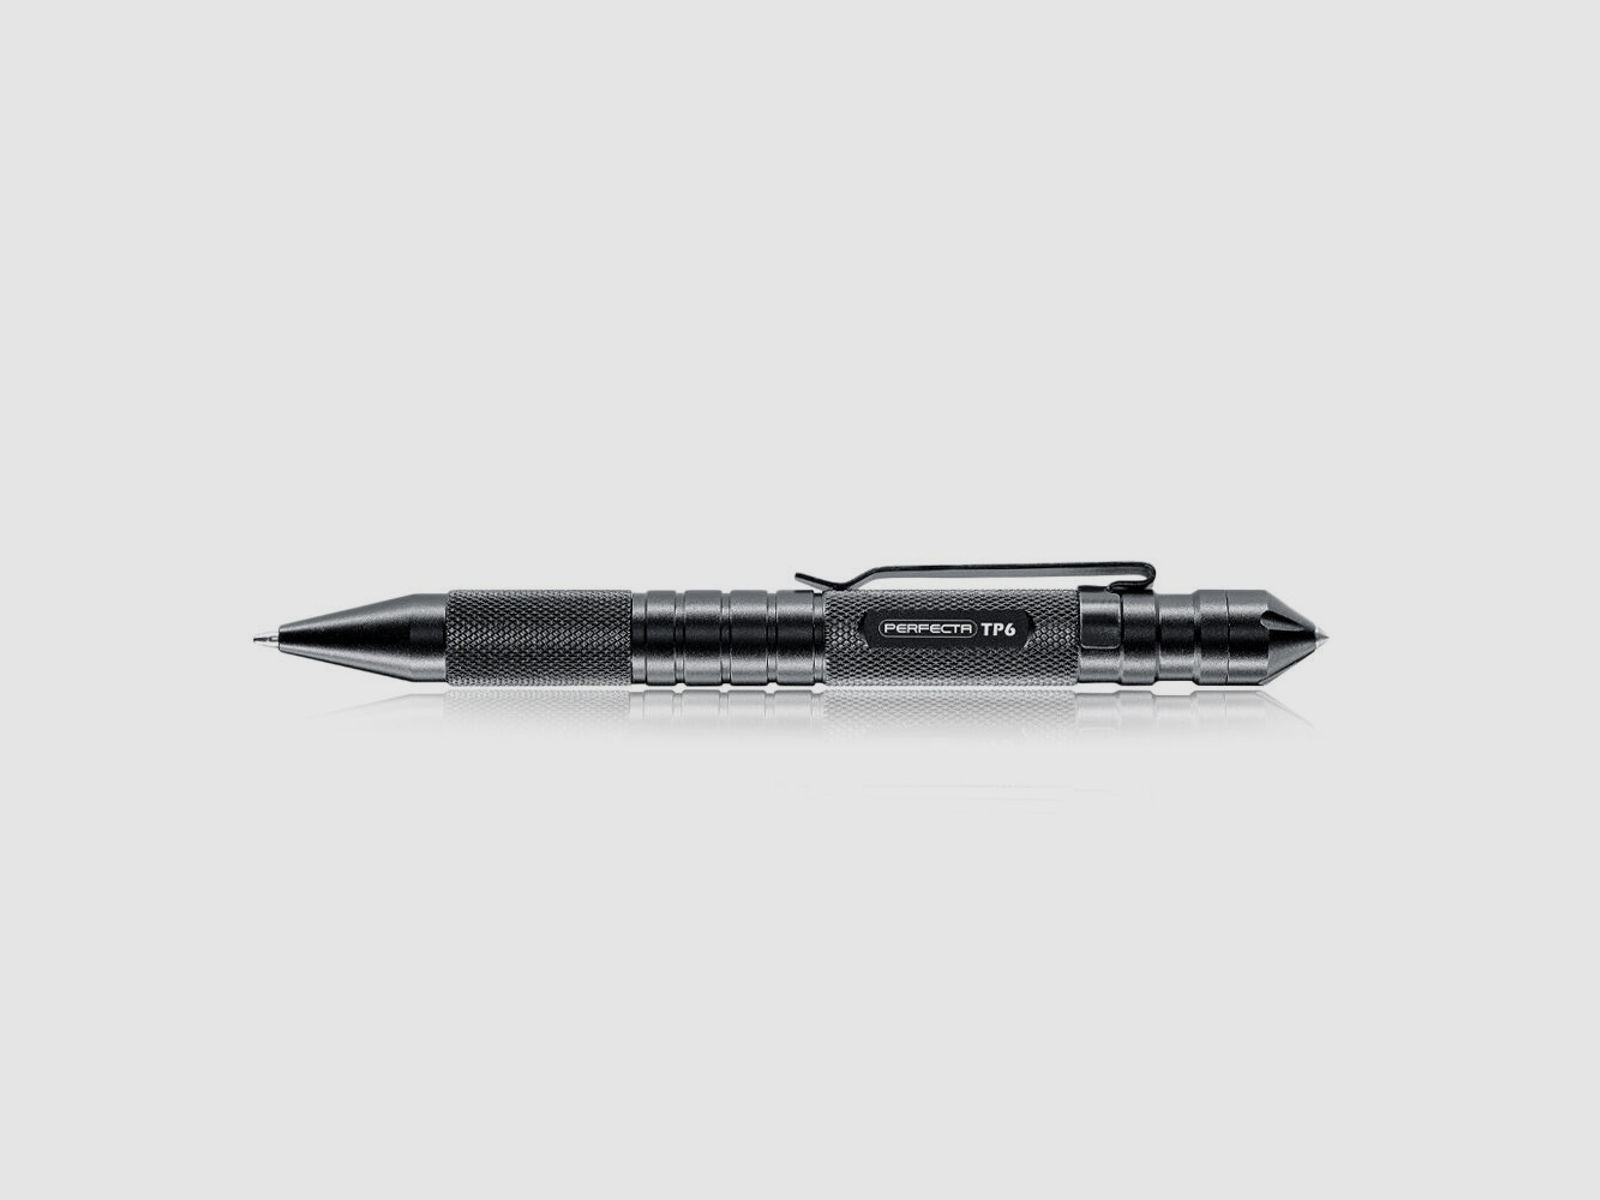 Perfecta TP 6 Tactical Pen mit Glasbrecher Schwarz